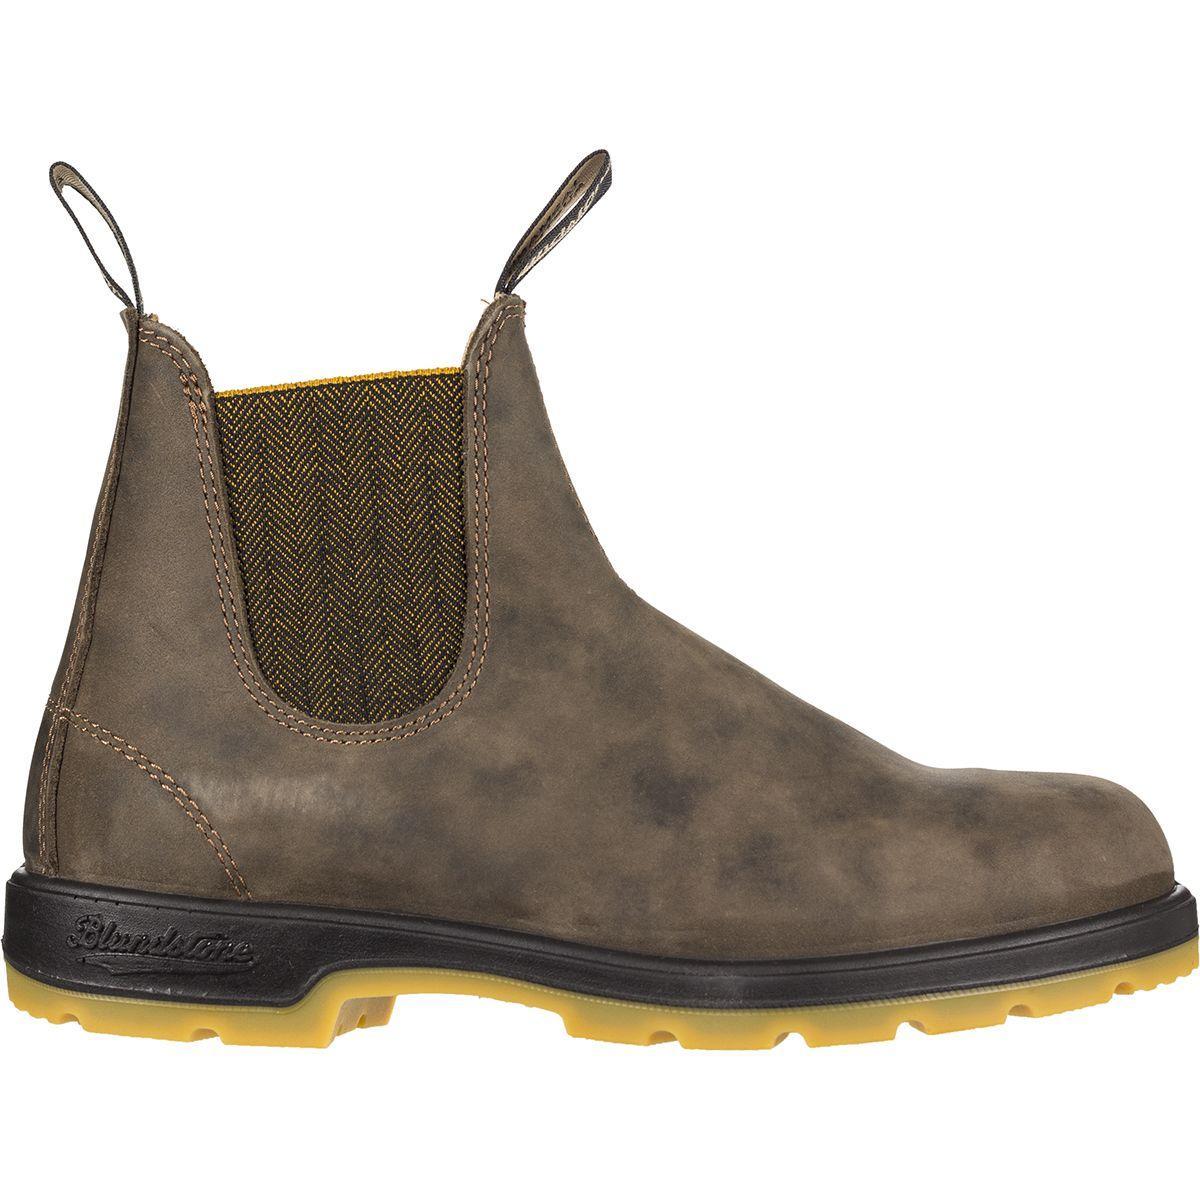 Blundstone Footwear Chelsea Boot Product Image